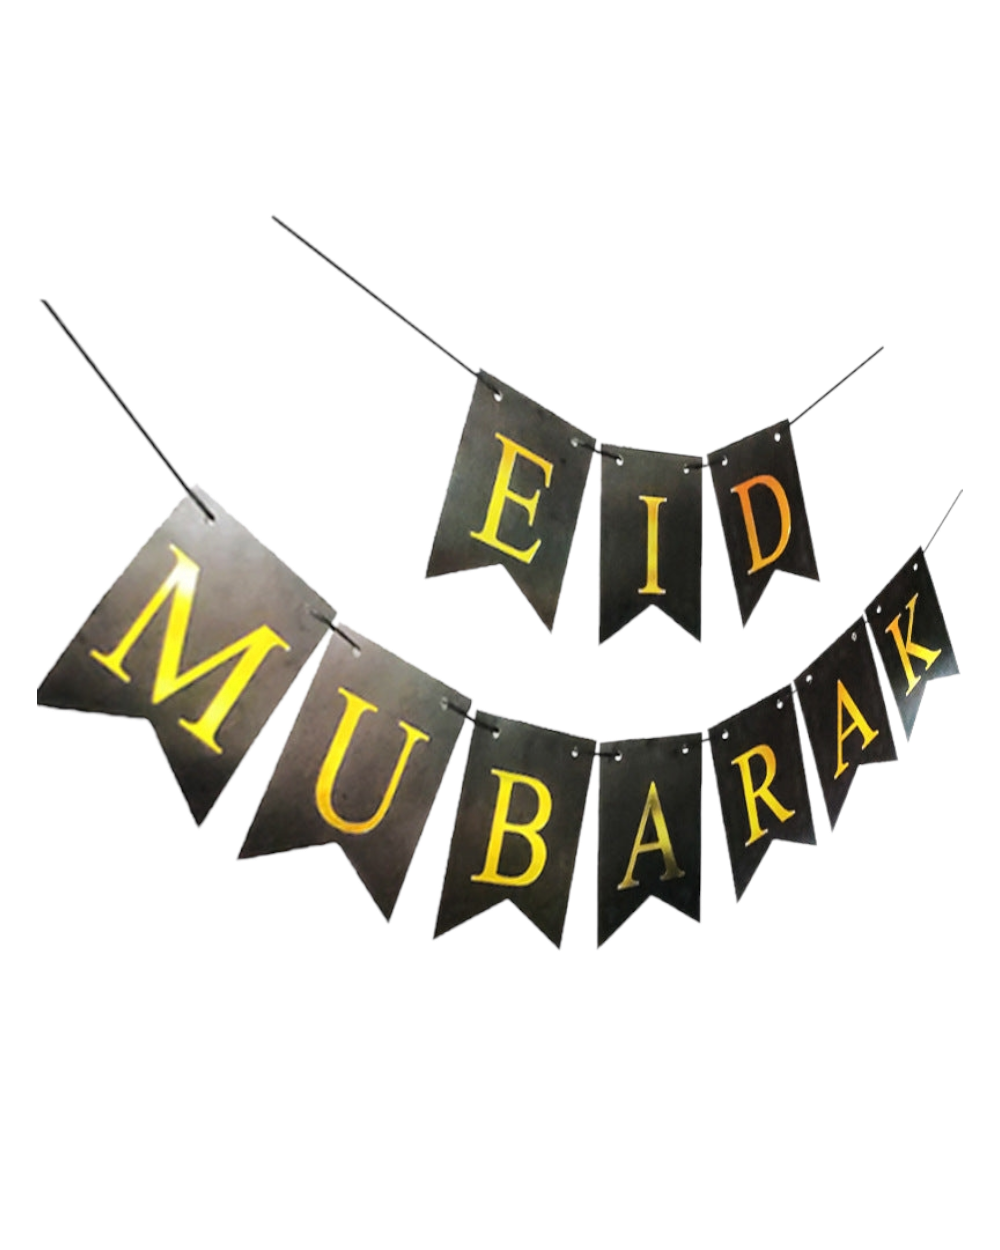 Eid Mubarak banner banner - Black and gold